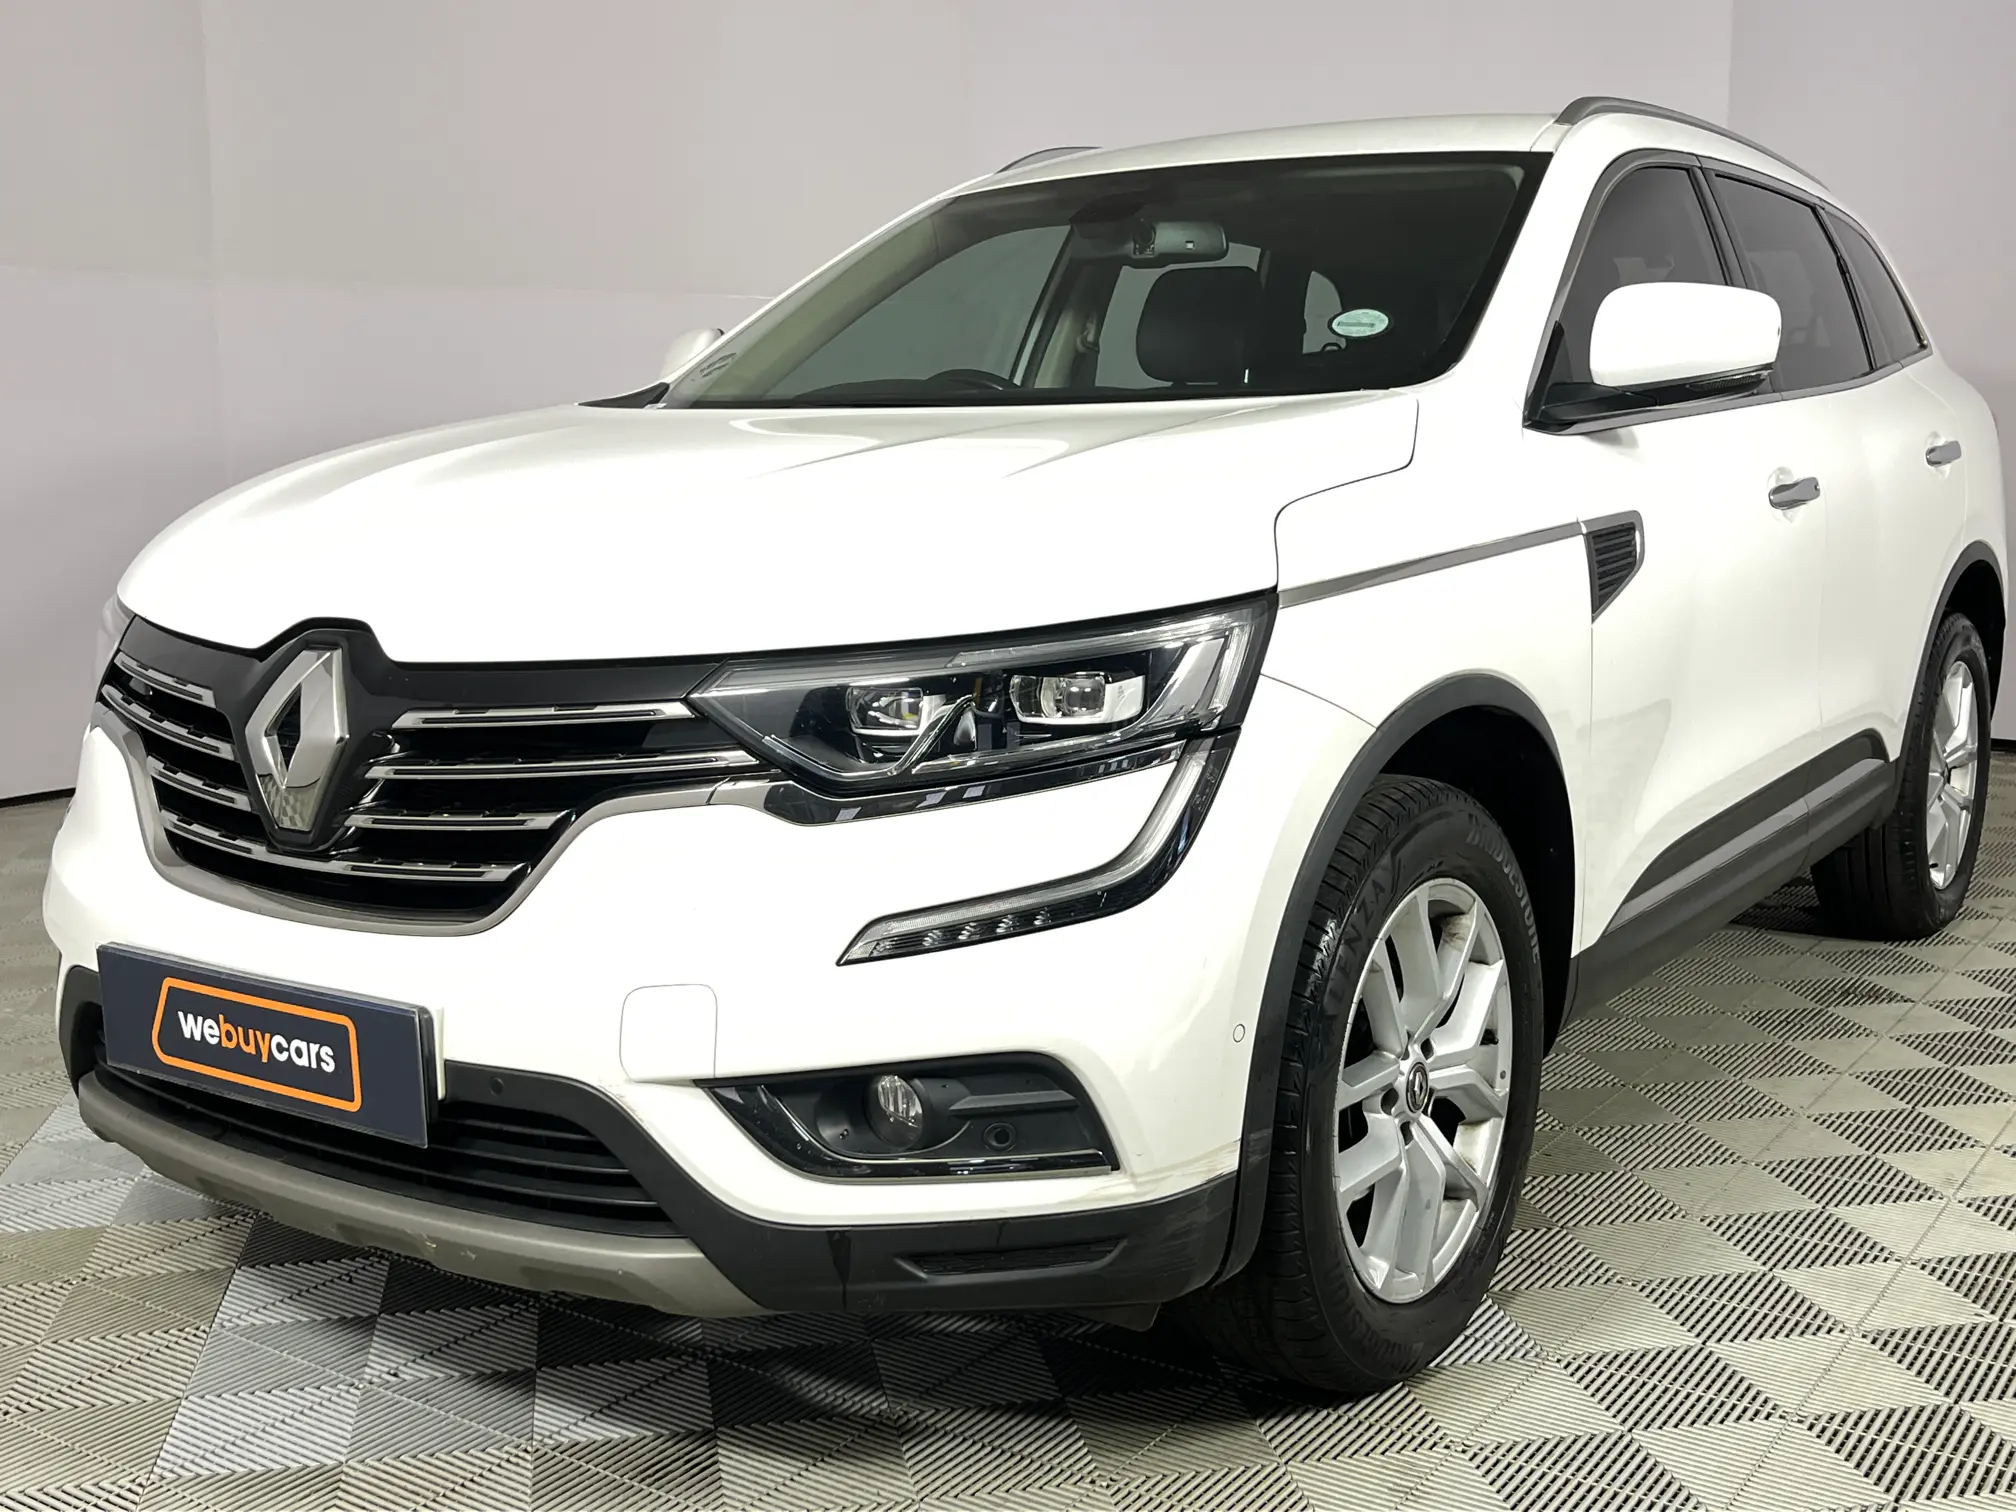 2019 Renault Koleos 2.5 Dynamique CVT 4x4